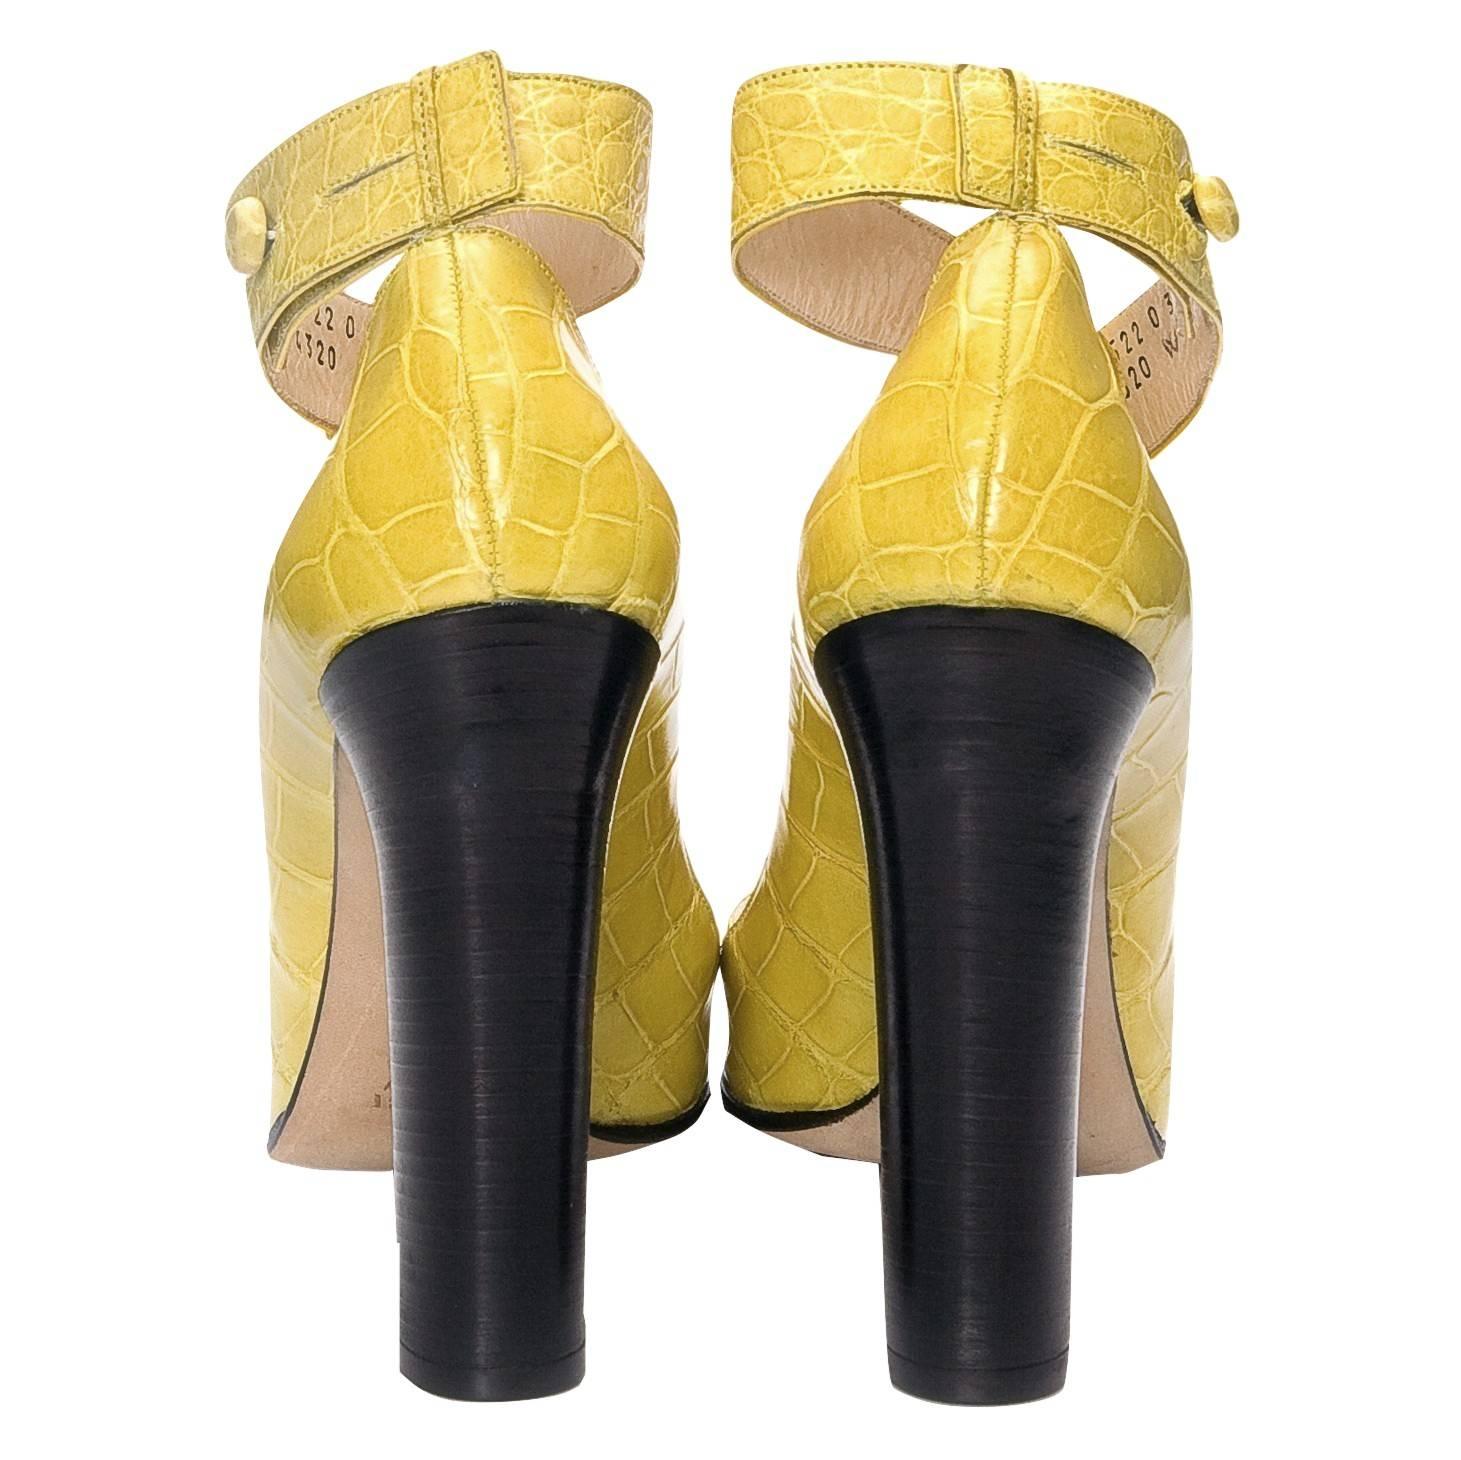 New Tom Ford for Gucci Yellow Crocodile Ballerina Heels Pumps Sz 39 1